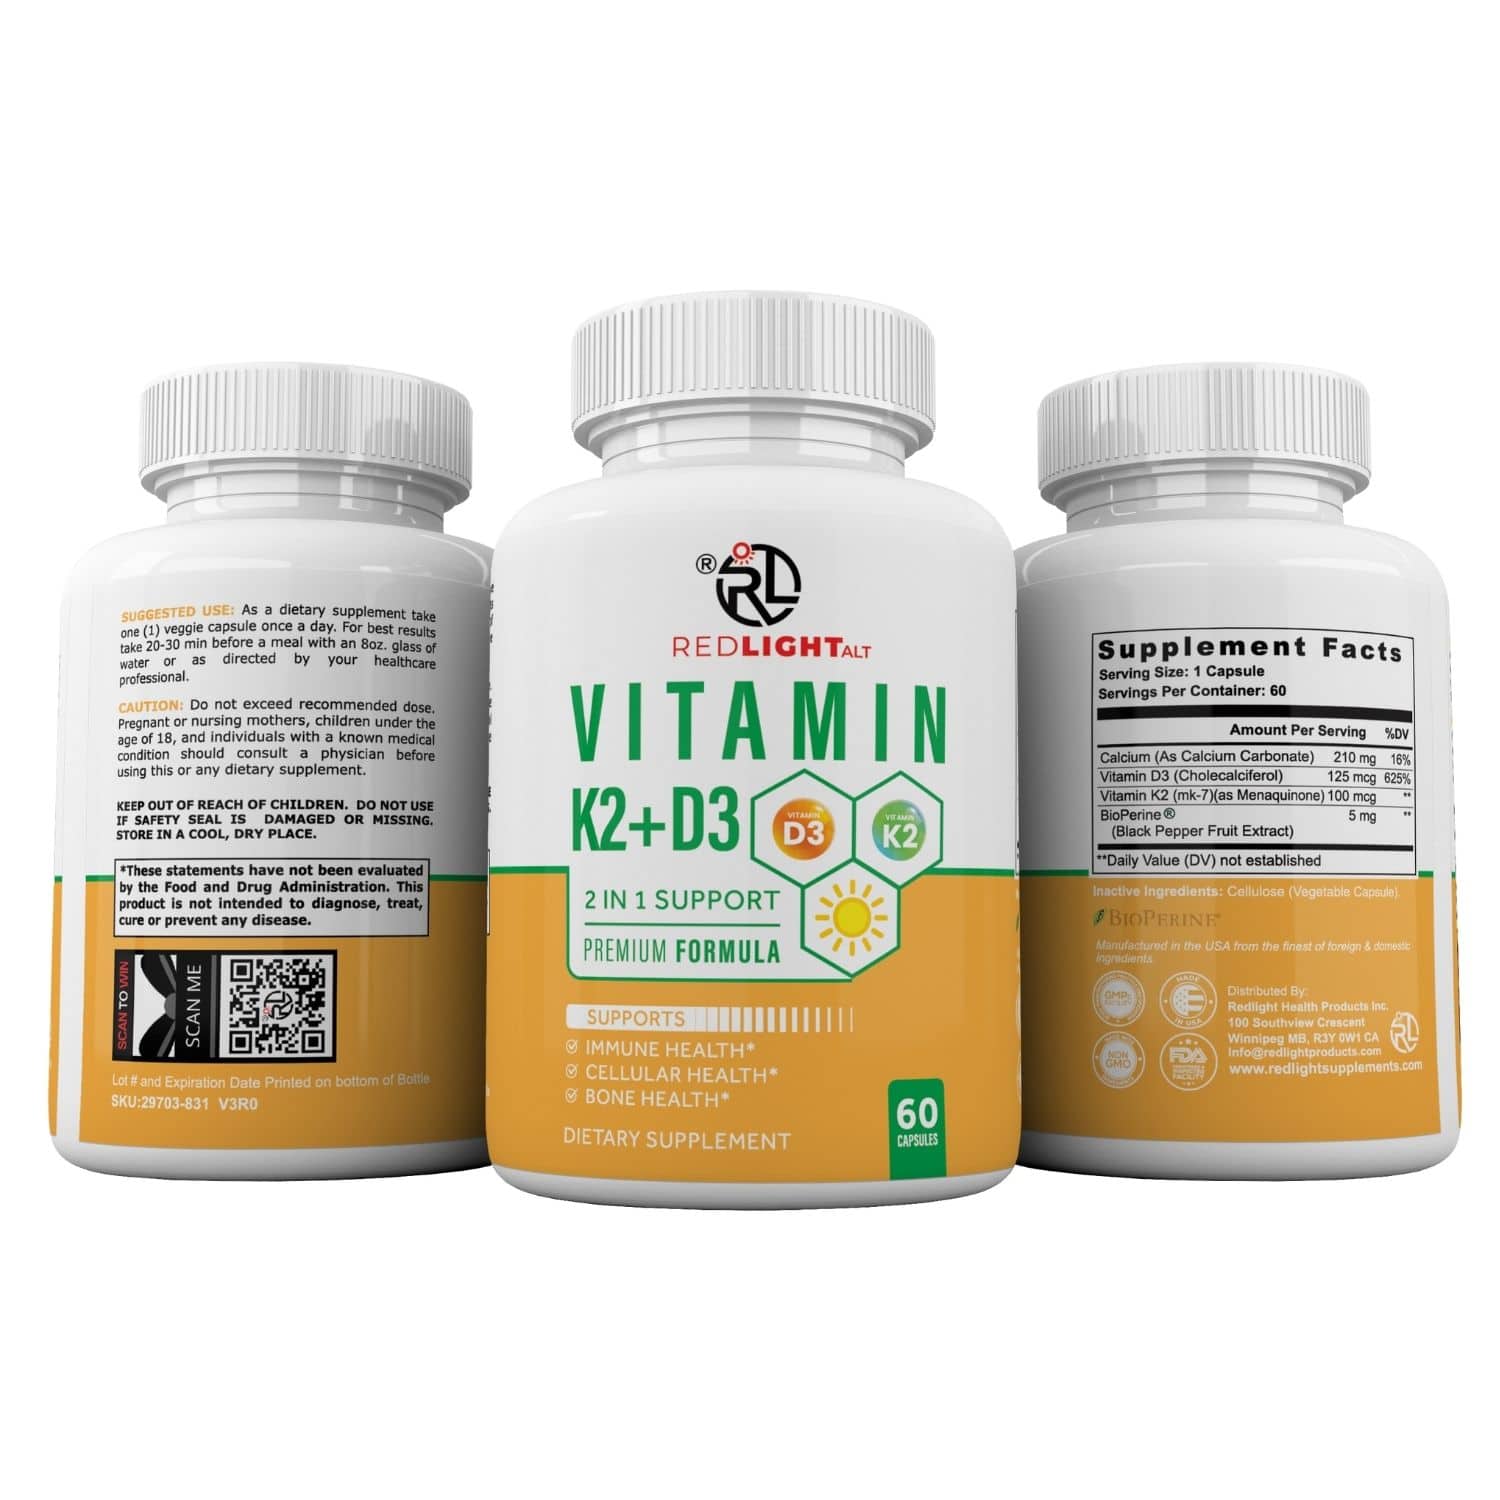 Redlight ALT vitamin d3 and k2 supplements